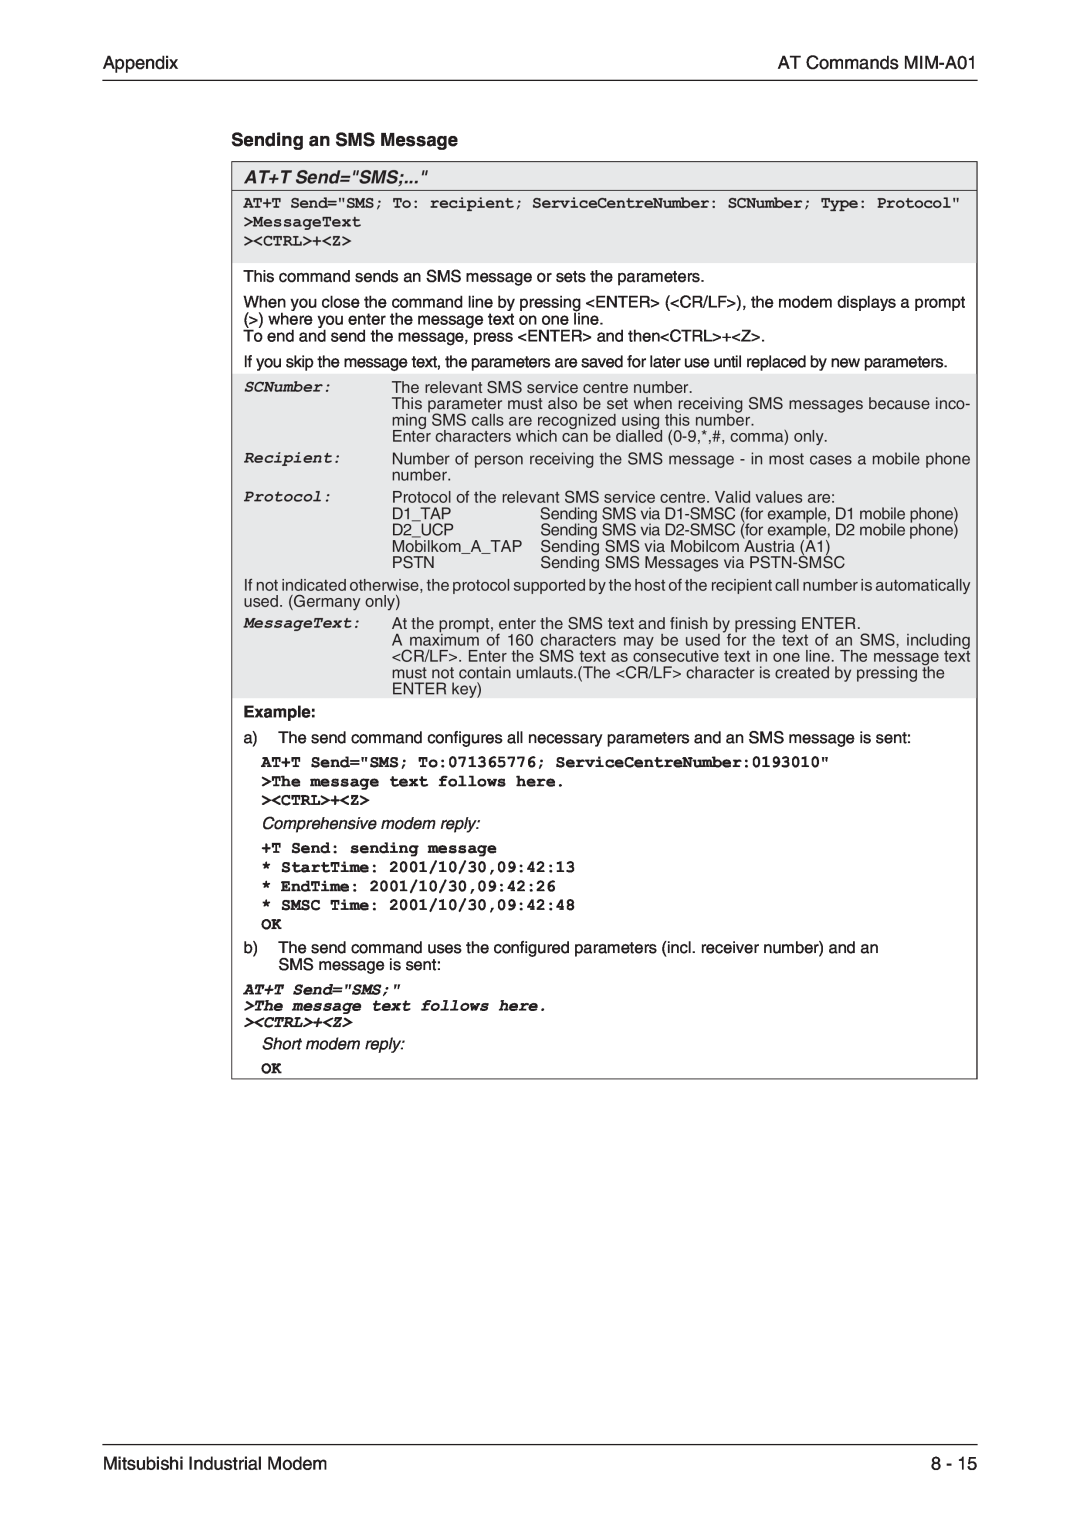 Mitsubishi Electronics MIM-G01 manual Sending an SMS Message, Ctrl+Z, Example, Comprehensive modem reply, Short modem reply 